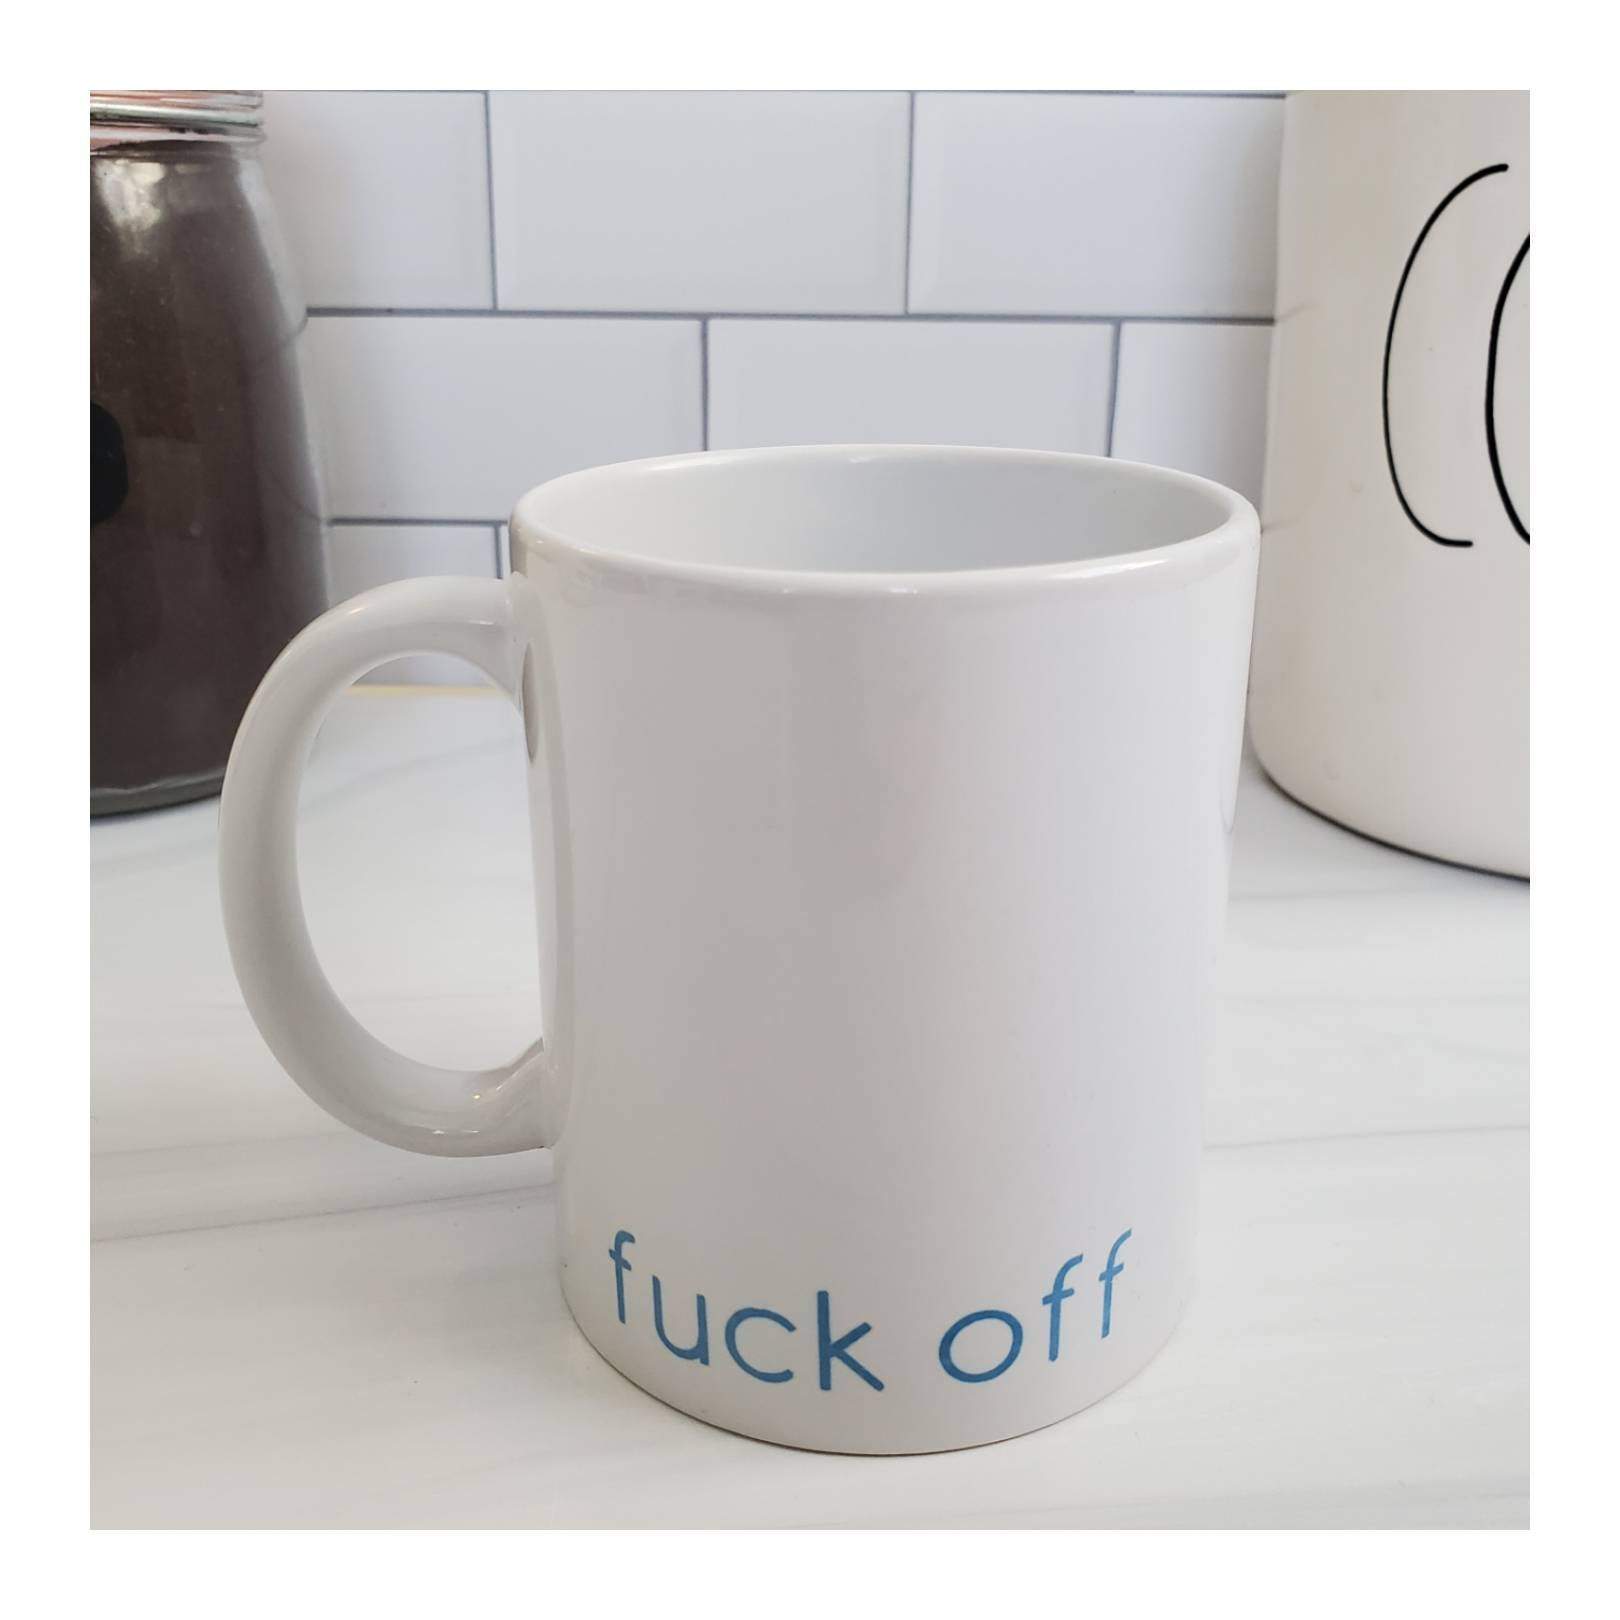 FUCK OFF Ceramic Coffee Mug Salt and Sparkle